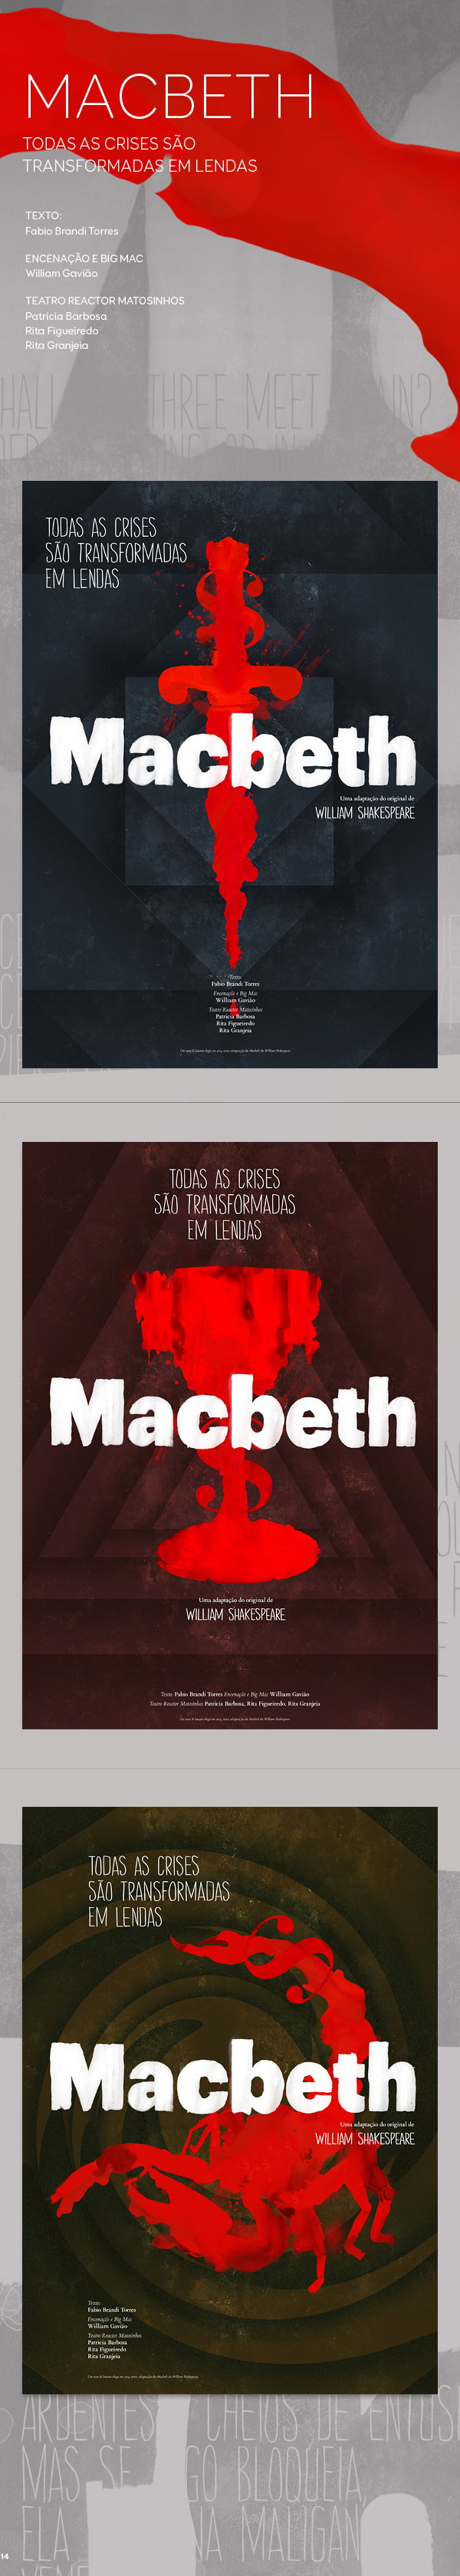 Luis Bandovas Satori poster Macbeth shakespeare